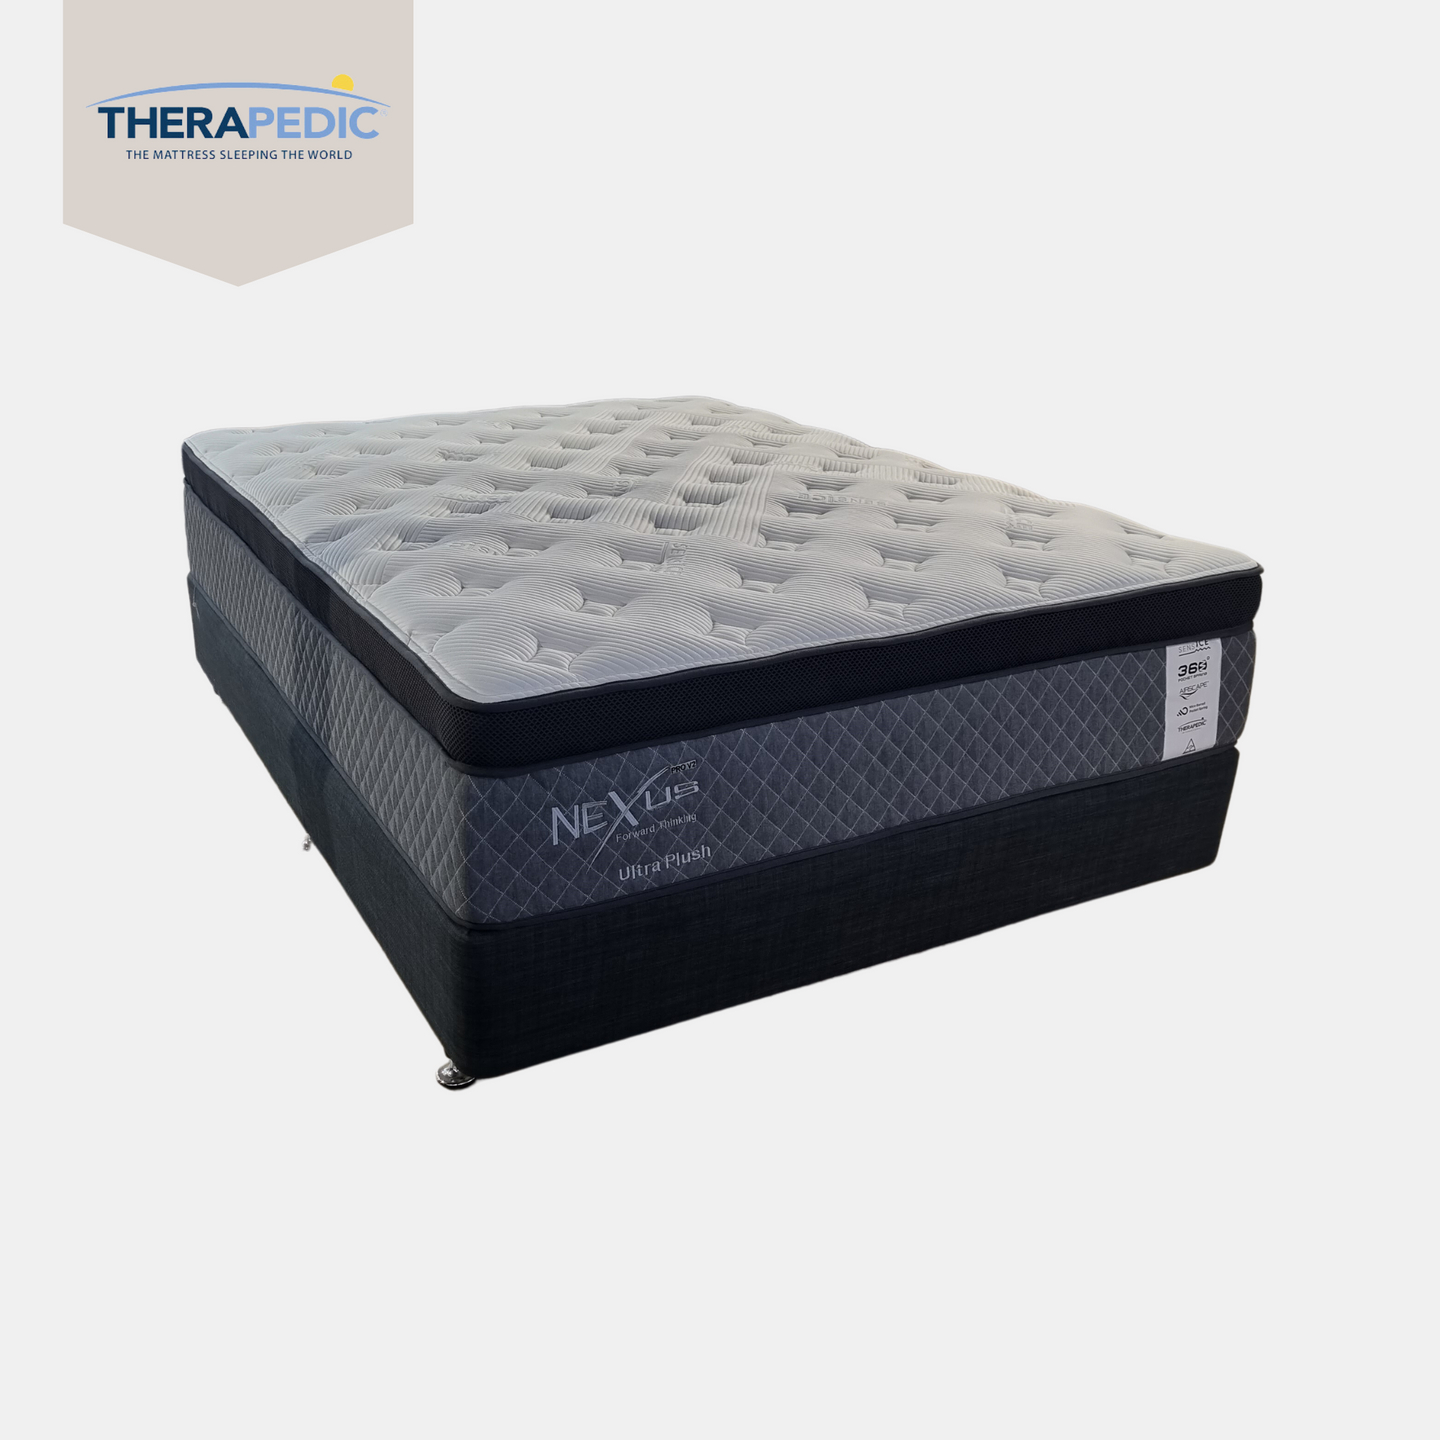 Nexus support mattress